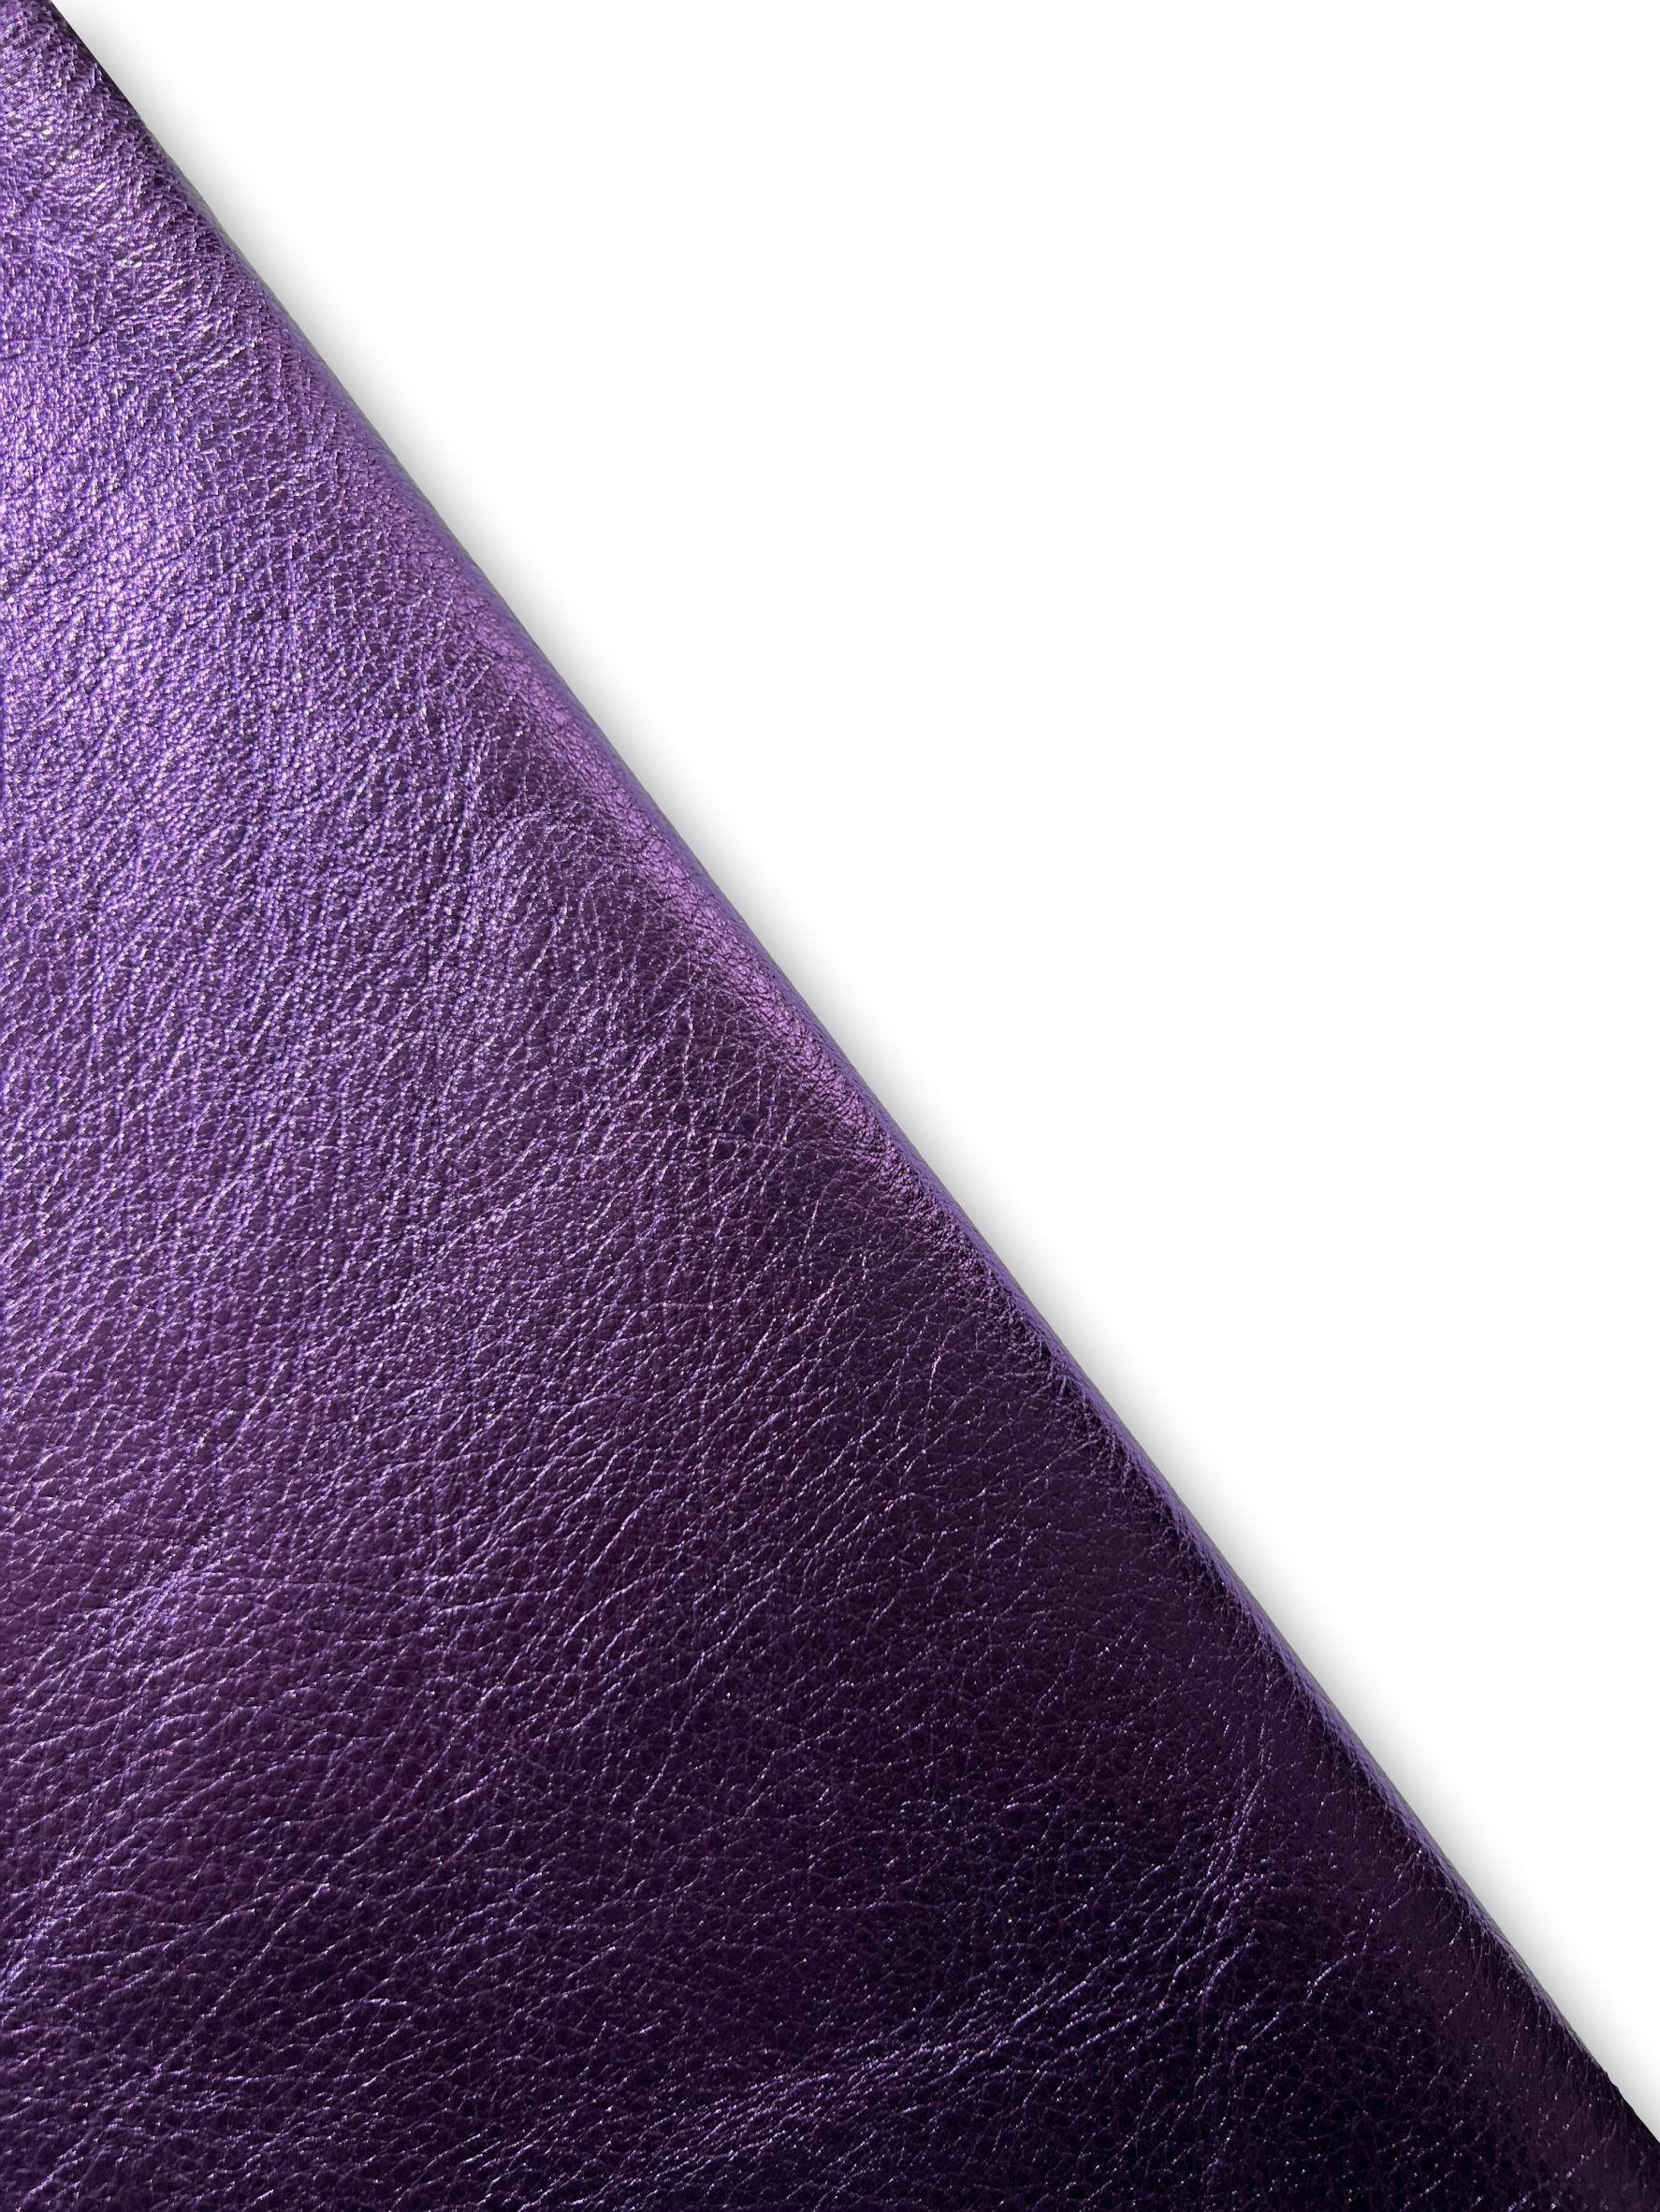 Metallic Purple – Leather Cowhide Skins TanneryNYC